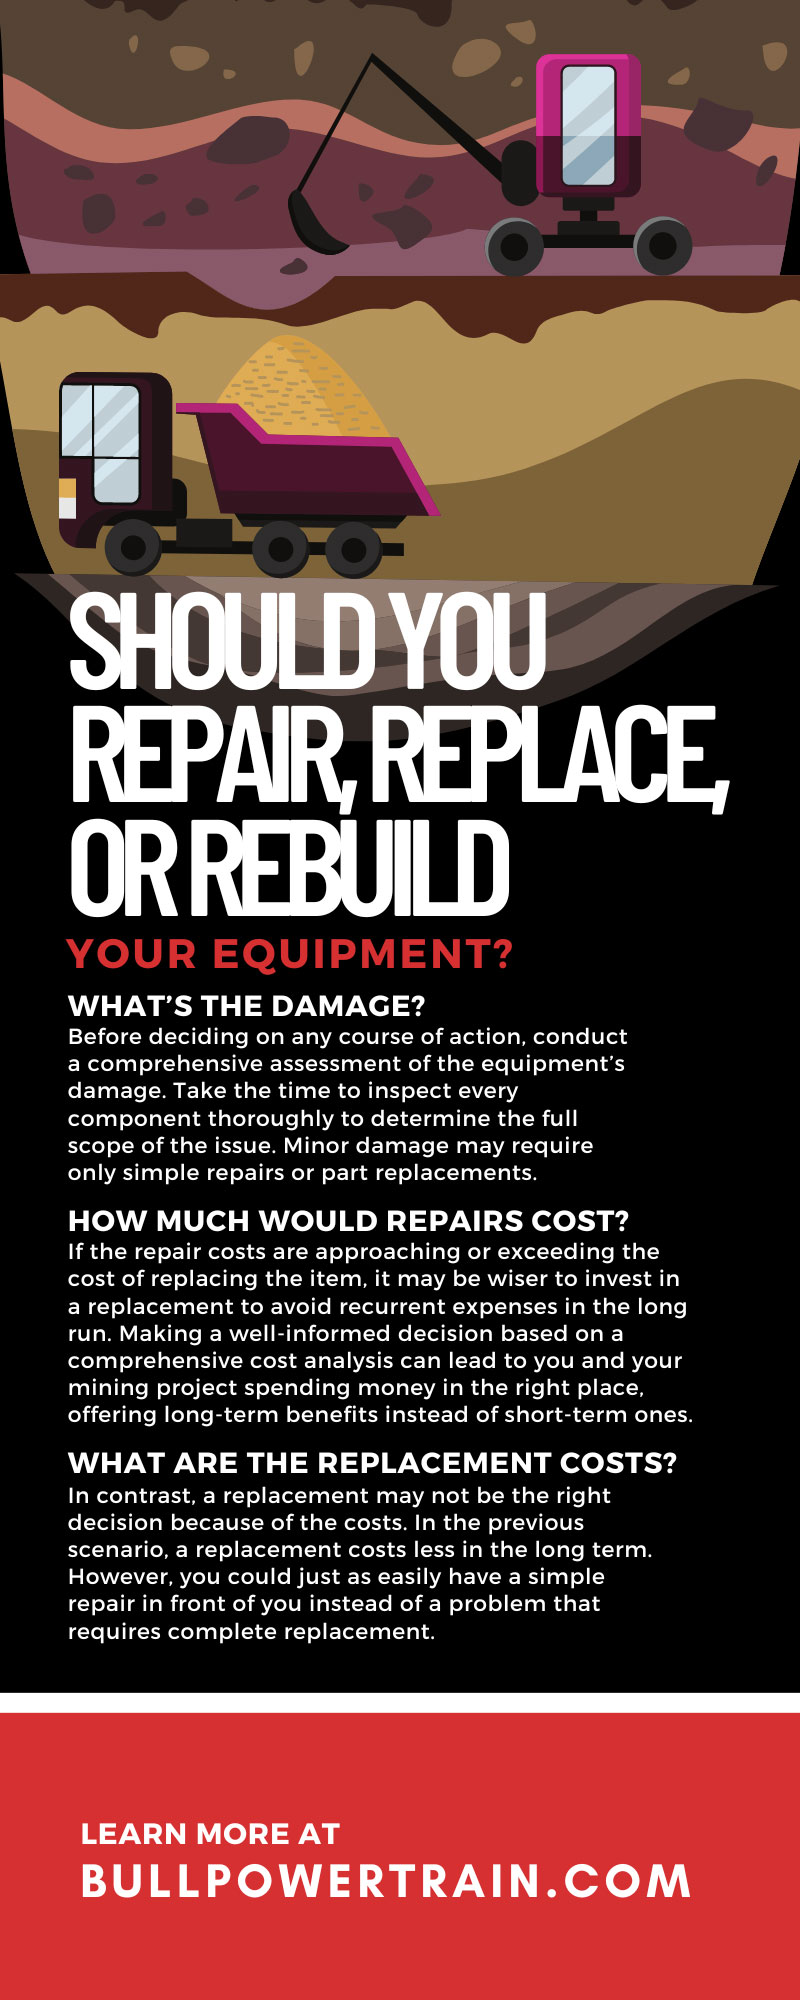 Should You Repair, Replace, or Rebuild Your Equipment?